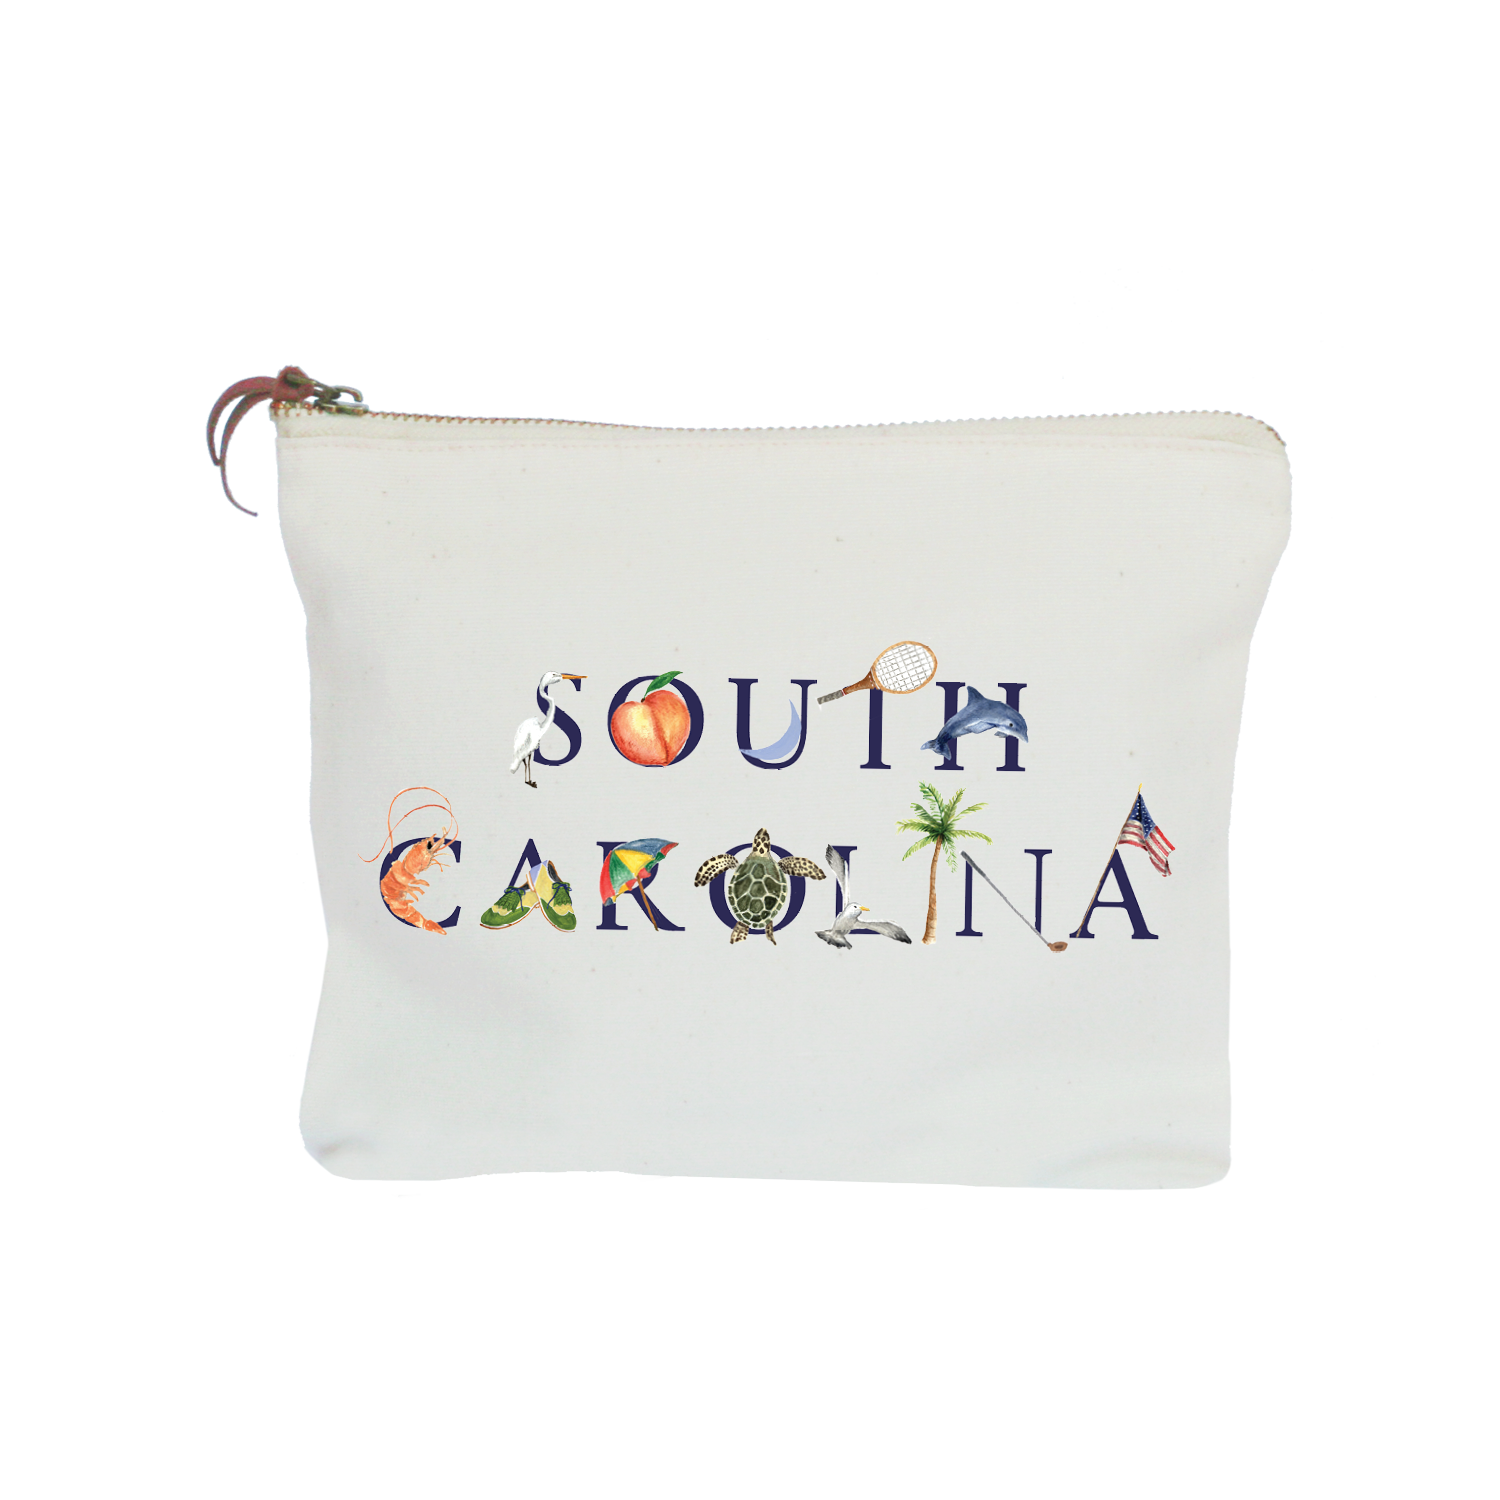 South Carolina zipper pouch